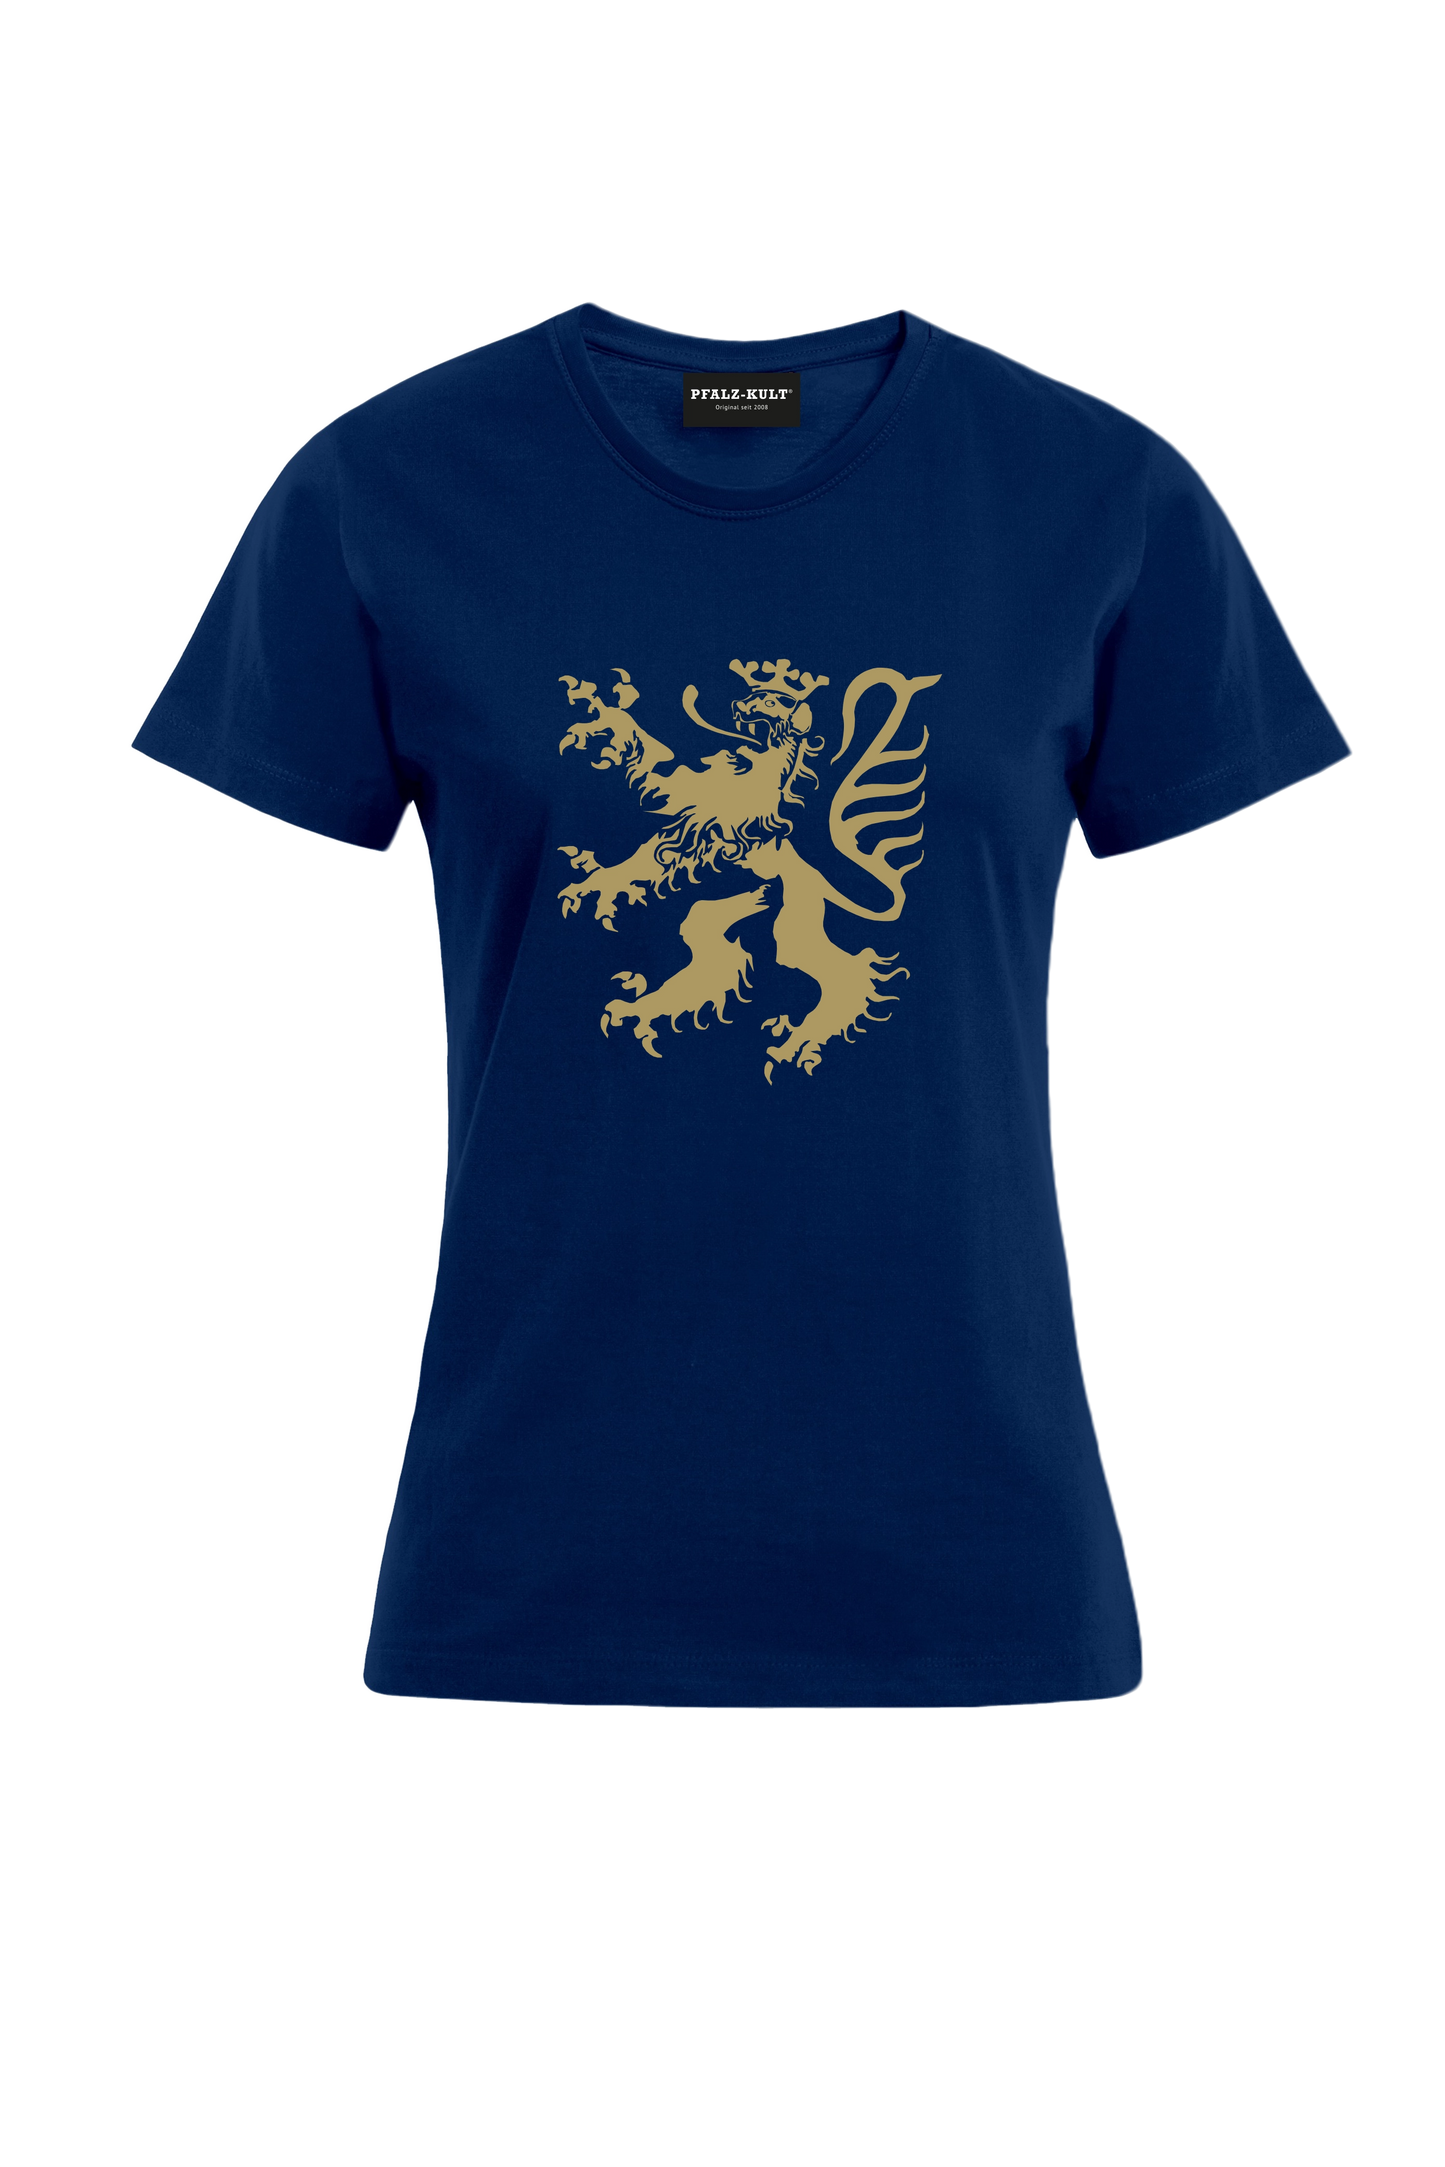 Pfälzer Löwe gold - Frauen T-Shirt